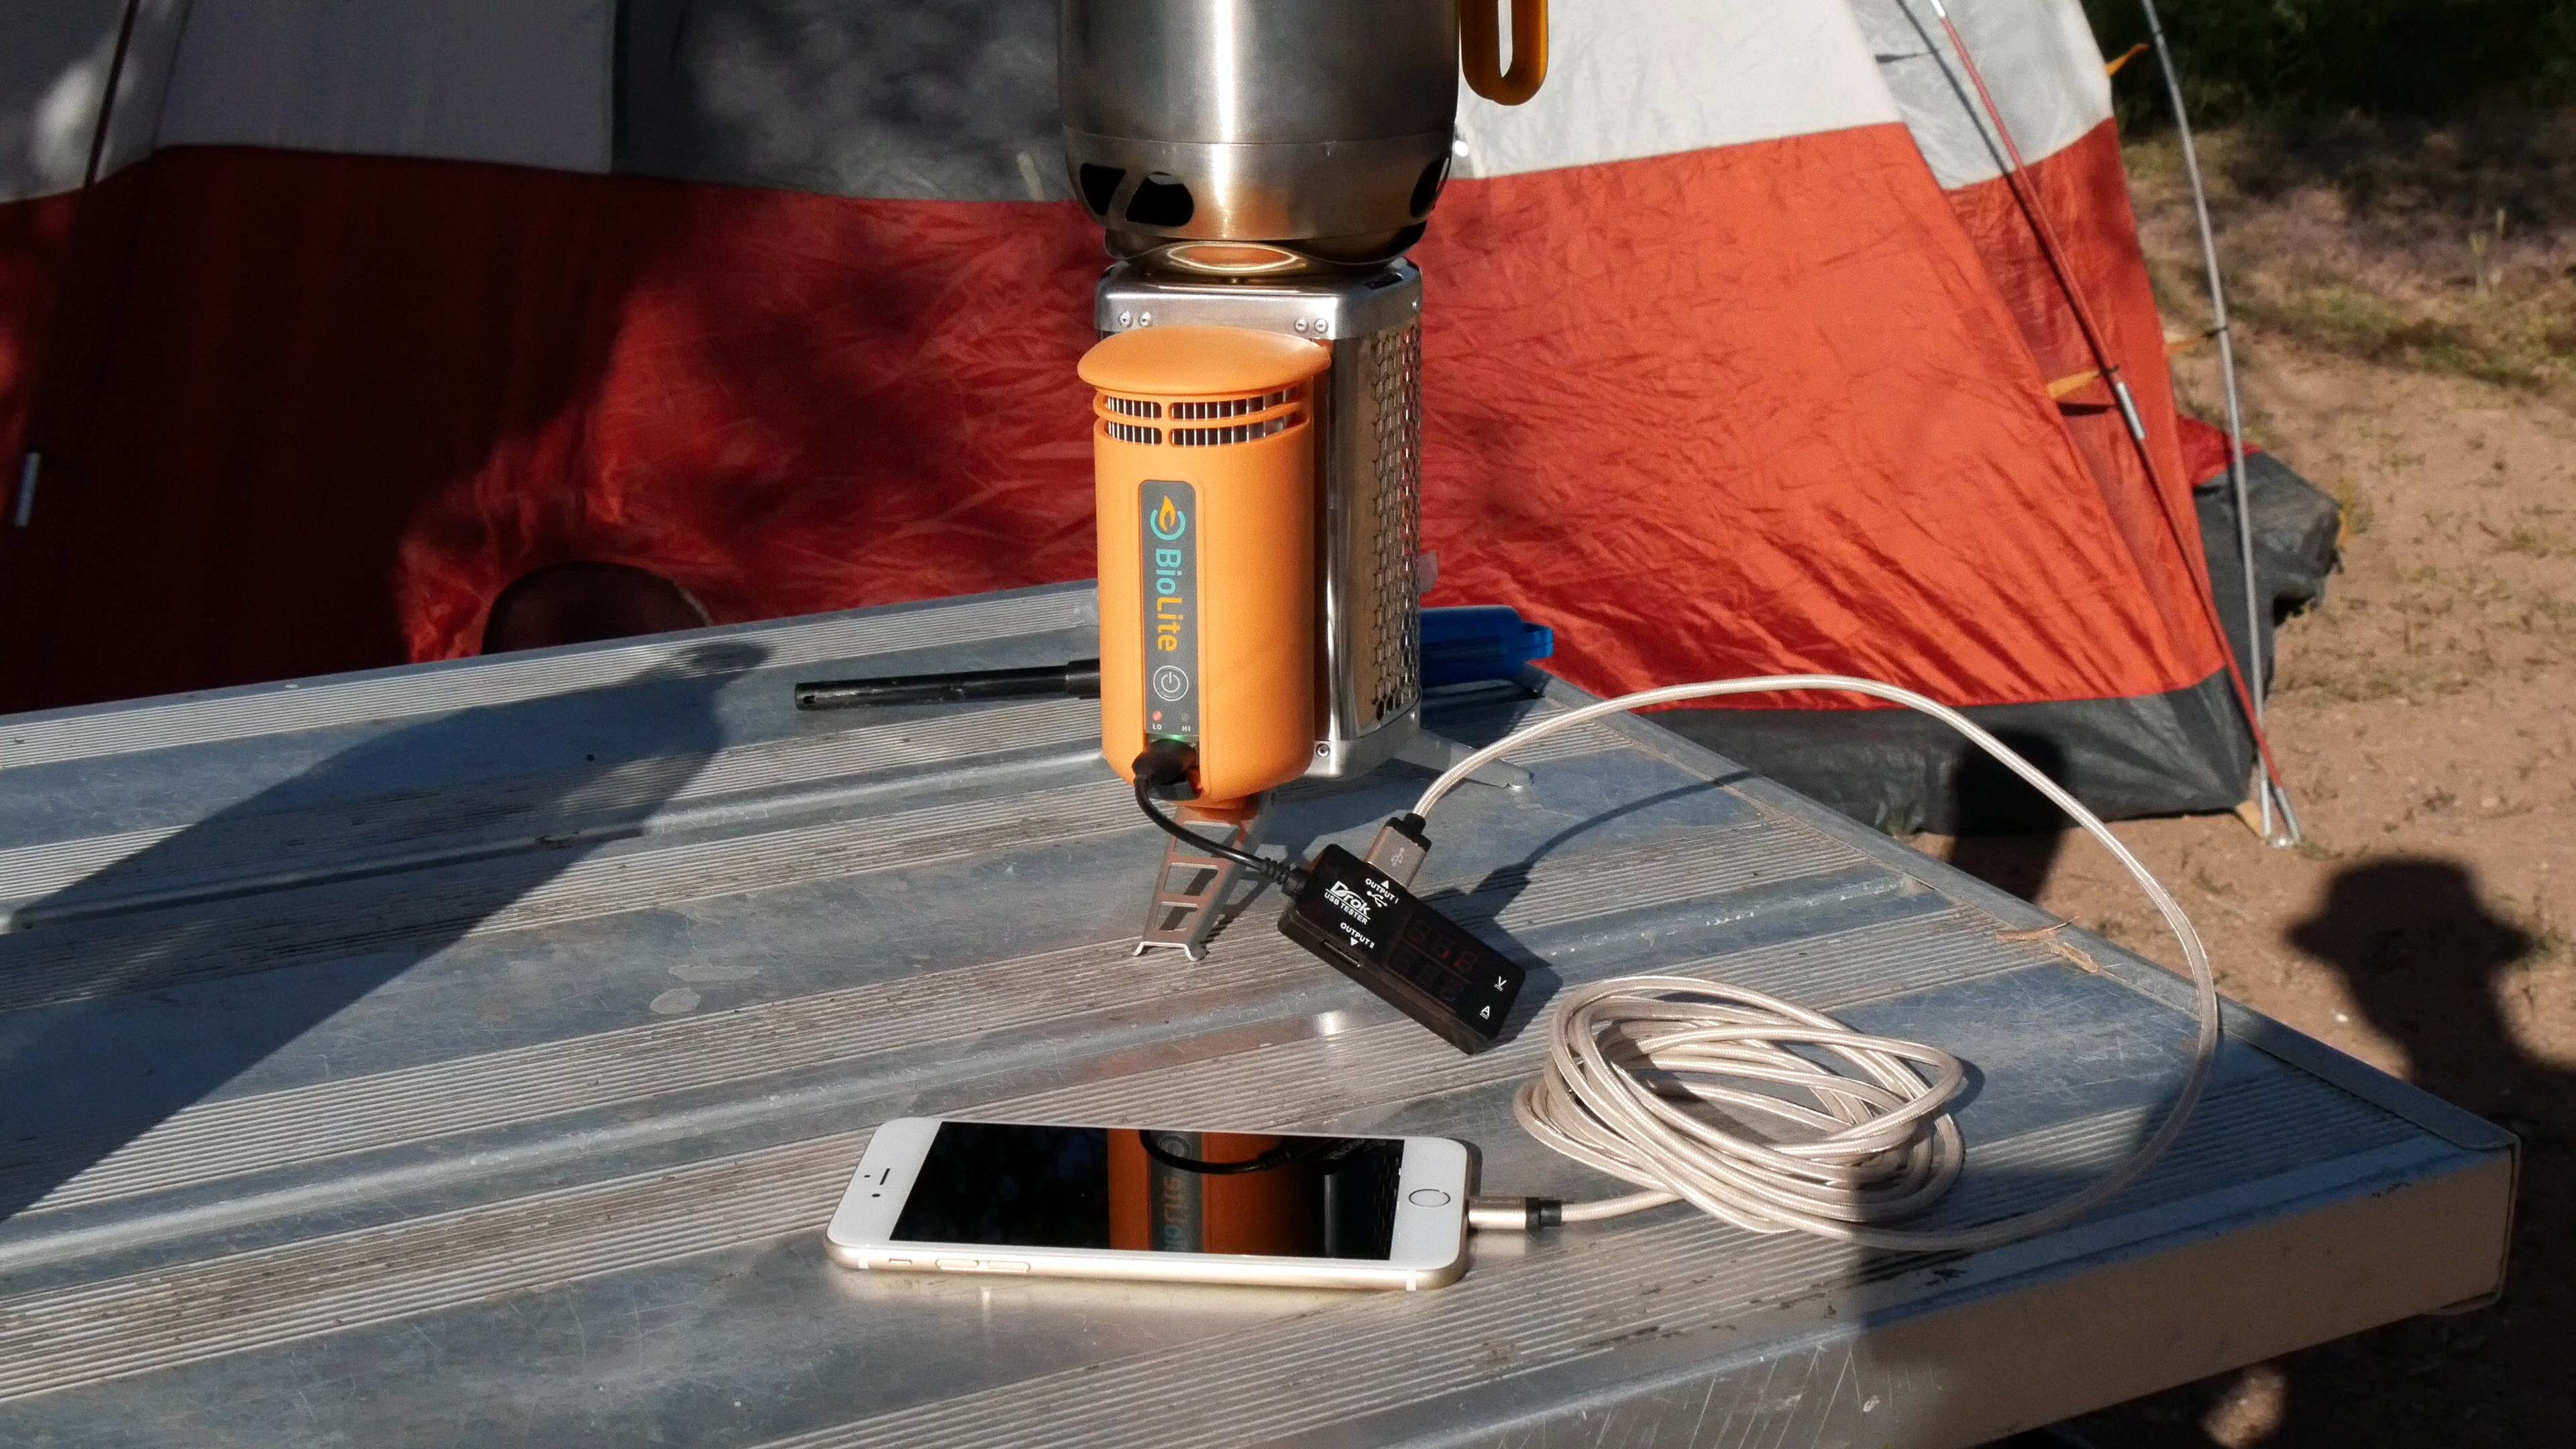 biolite camp stove attachments accessories review 4